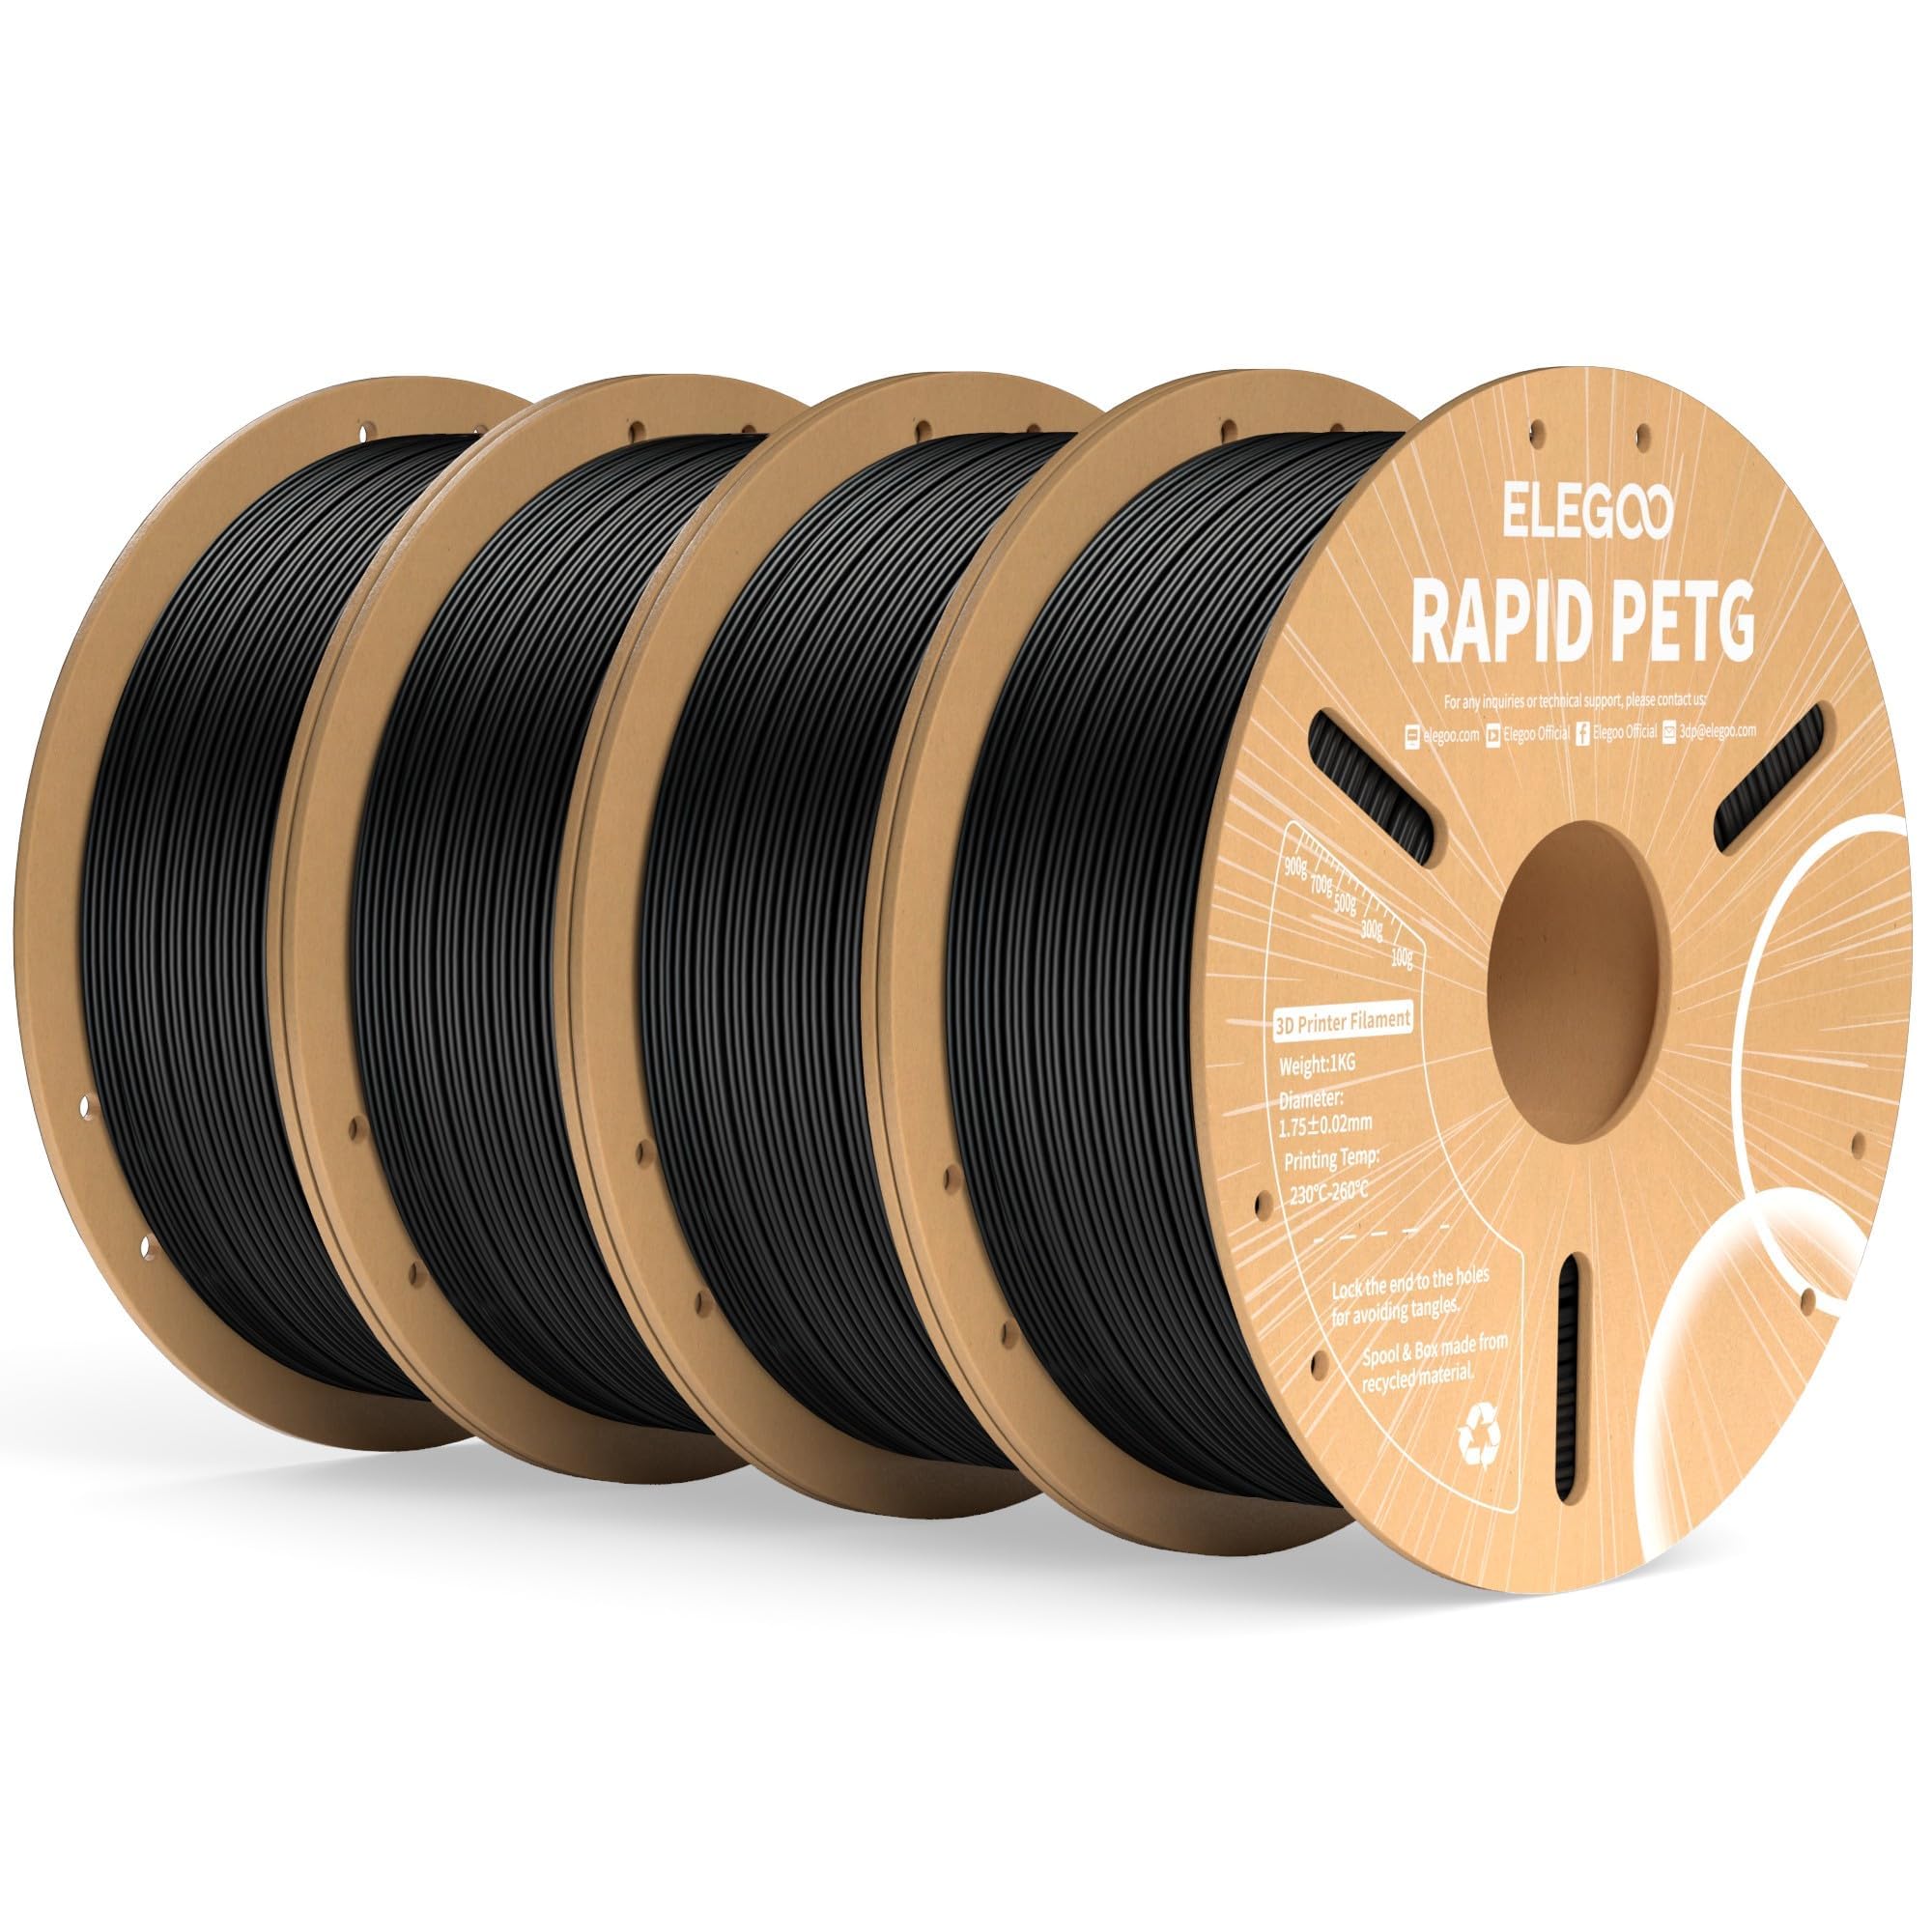 ELEGOO Rapid PETG Filament 1.75mm Black 4KG 4, 1KG spools , $40.77